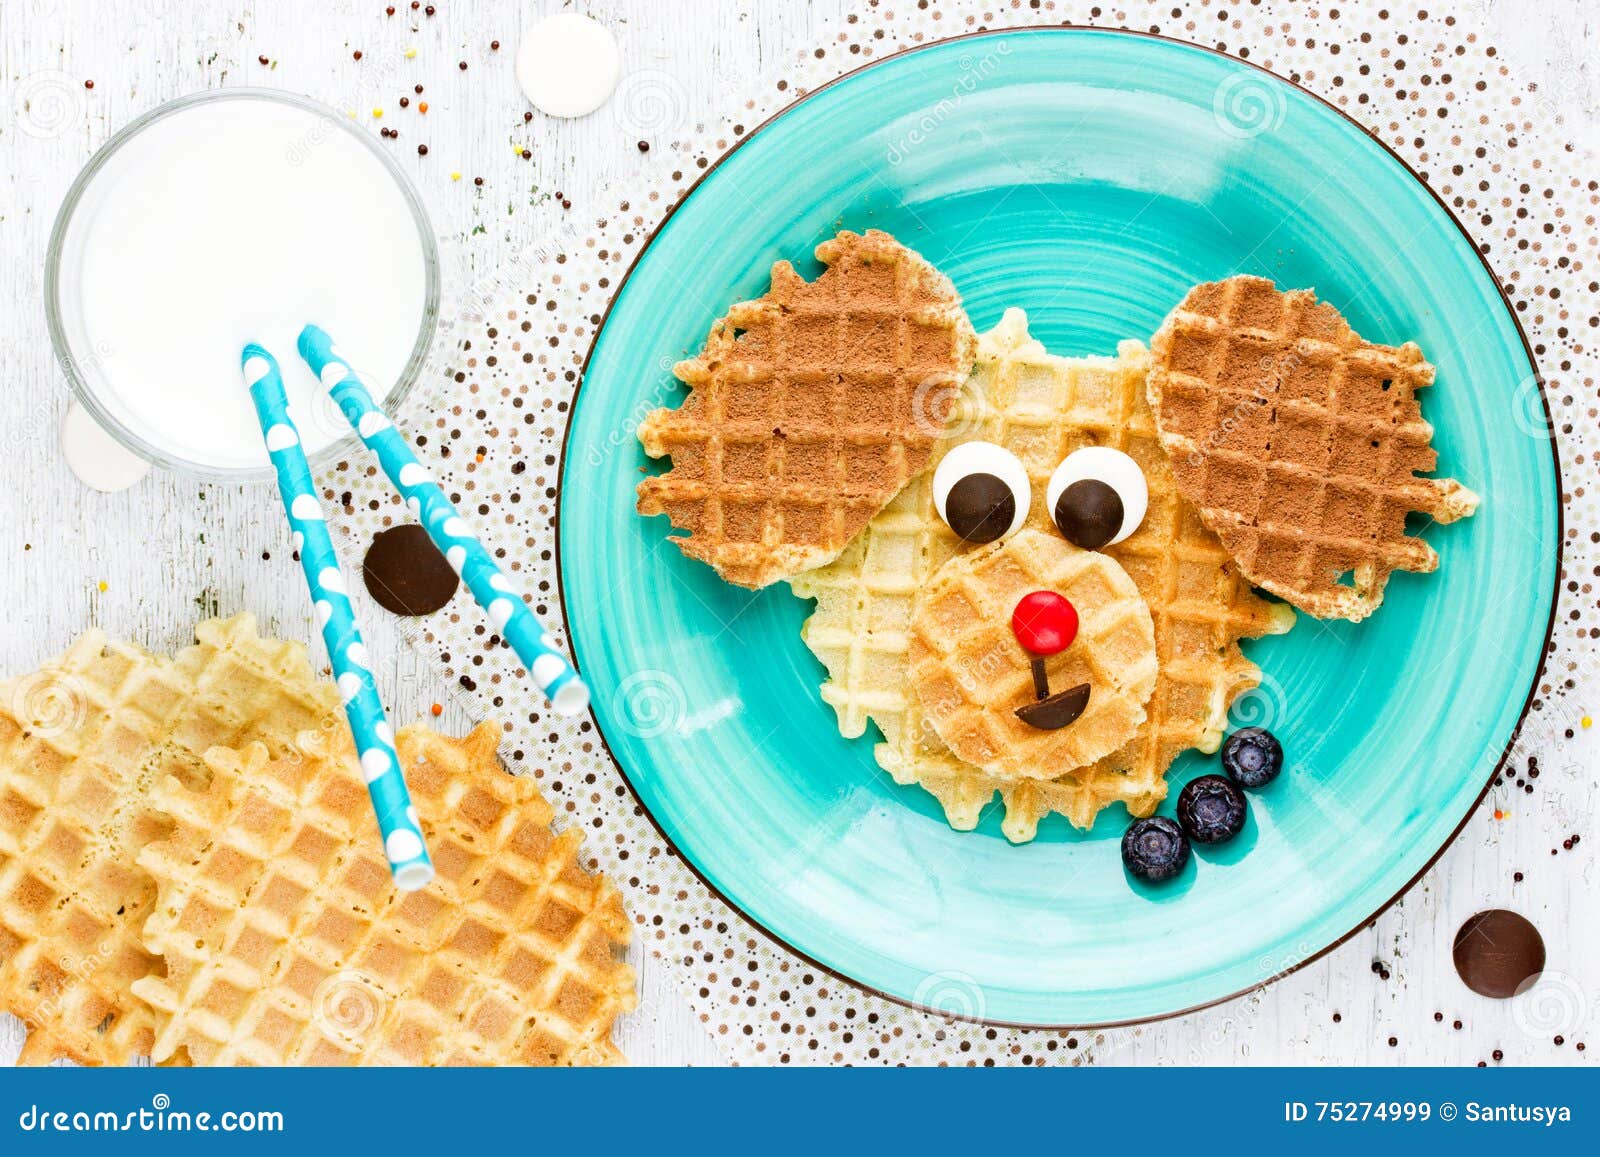 https://thumbs.dreamstime.com/z/puppy-dog-waffles-baby-breakfast-animal-shaped-adorable-art-food-kid-creative-idea-child-fun-dessert-75274999.jpg